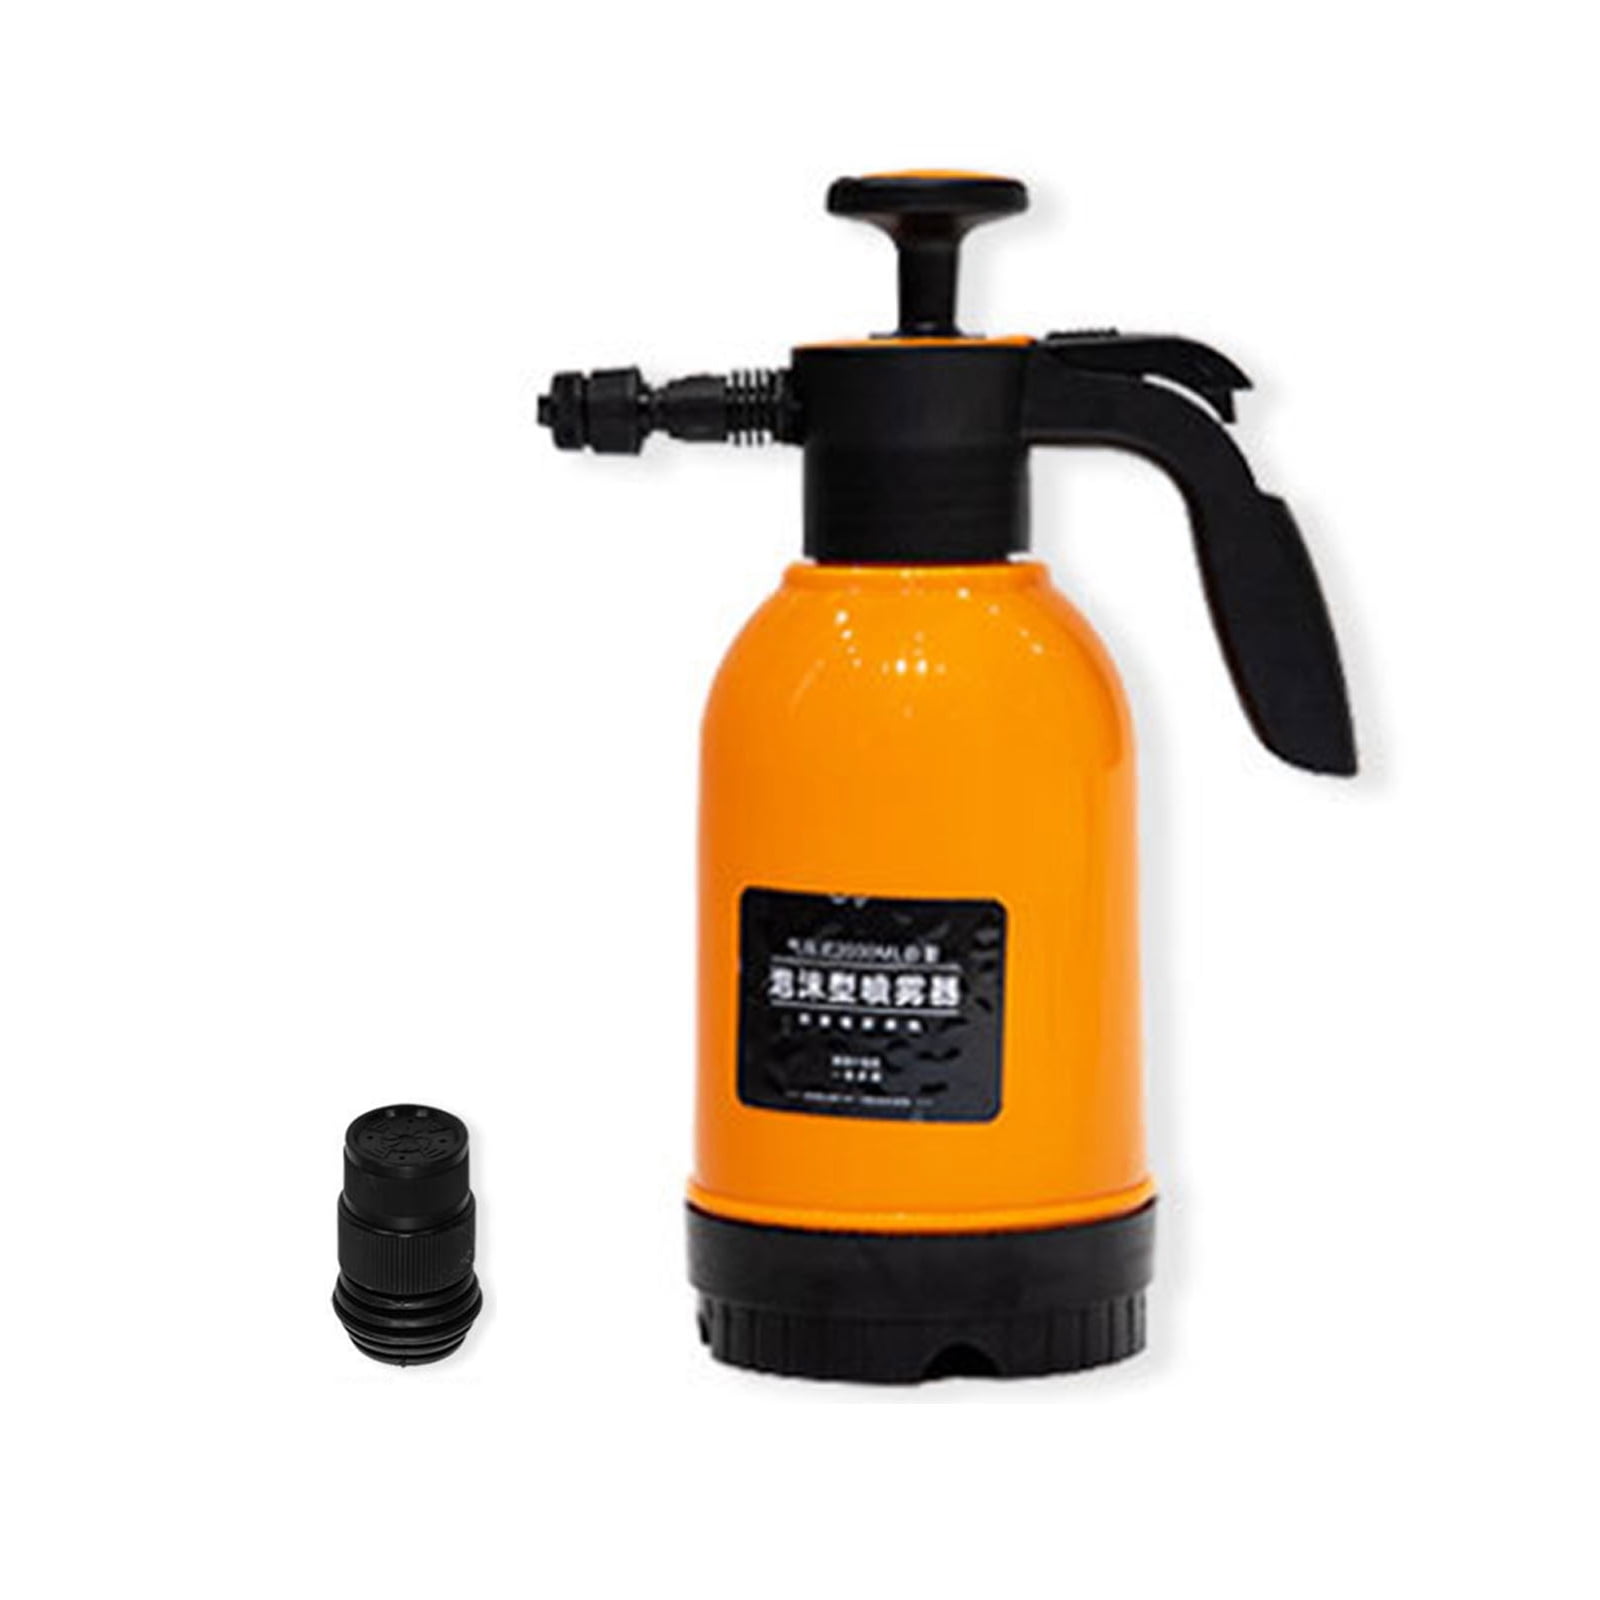 Hand Pressure Foam Sprayer for Car Detailing Home Cleaning and Garden Use Maxshine 1.5L Pump Foam Sprayer 